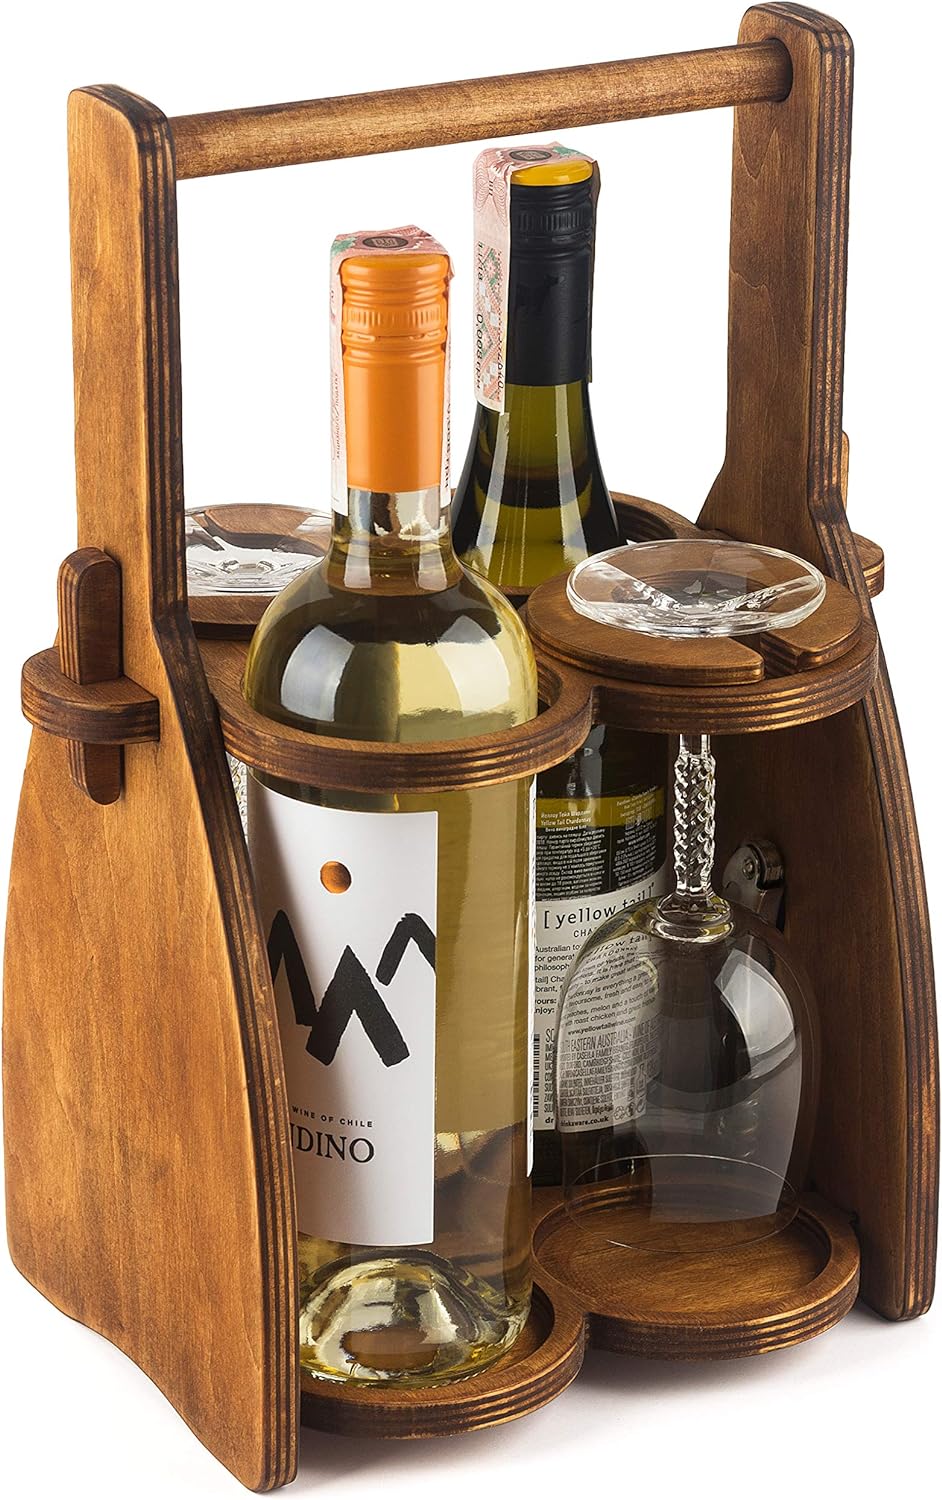 ROSTMARYGIFT Wood Wine Bottle Glasses Caddy - Beer Carrier - Drinking Desk Accessories Men\\\'s Wine Organizer - Glass Tray Holder - Wine Storage Stand - Drink Holder for Beer, for Wine